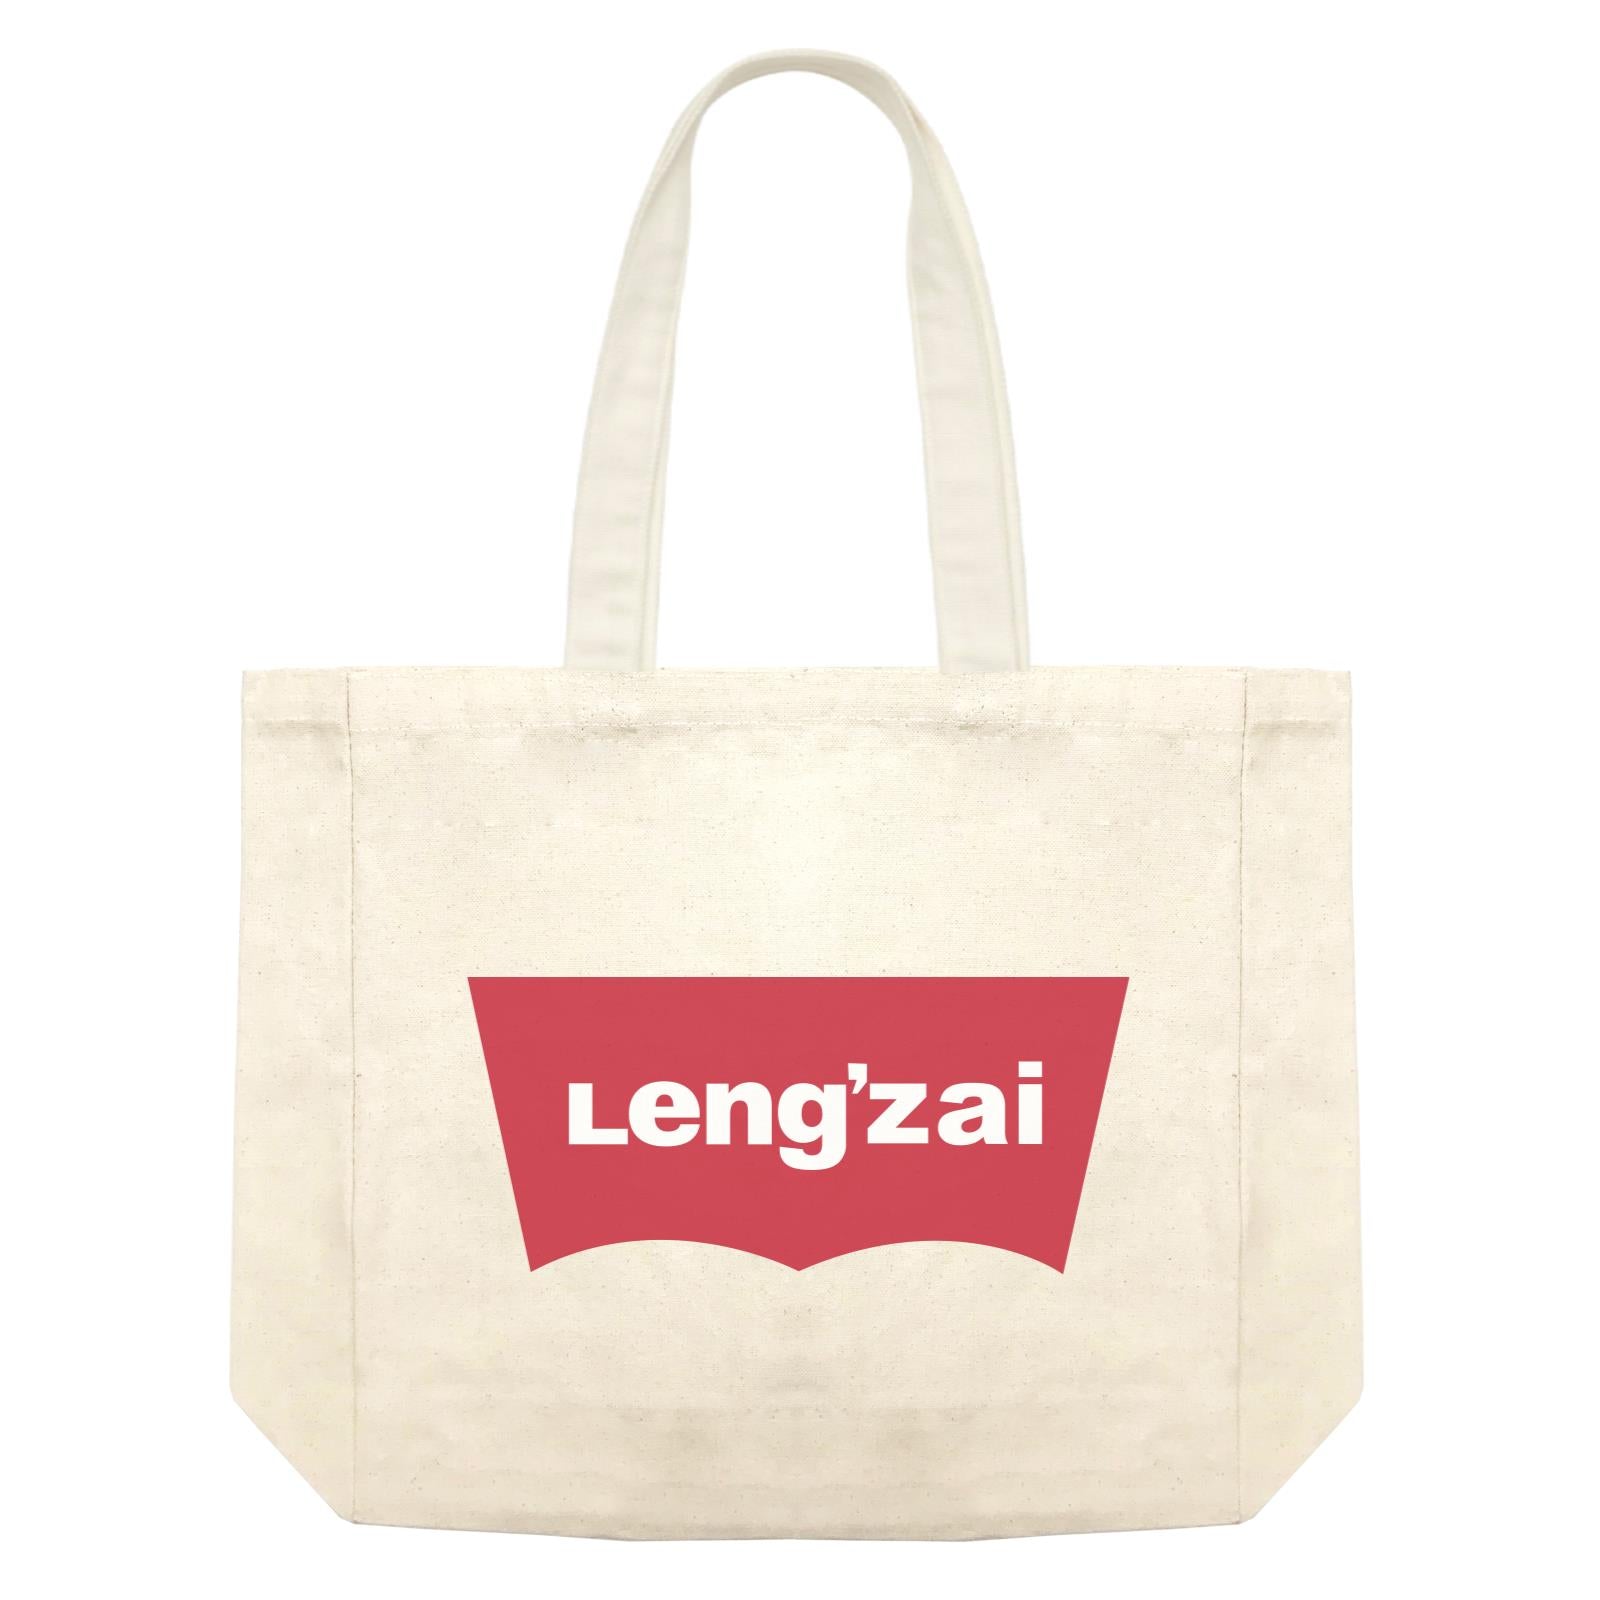 Slang Statement Lengzai Accessories Shopping Bag